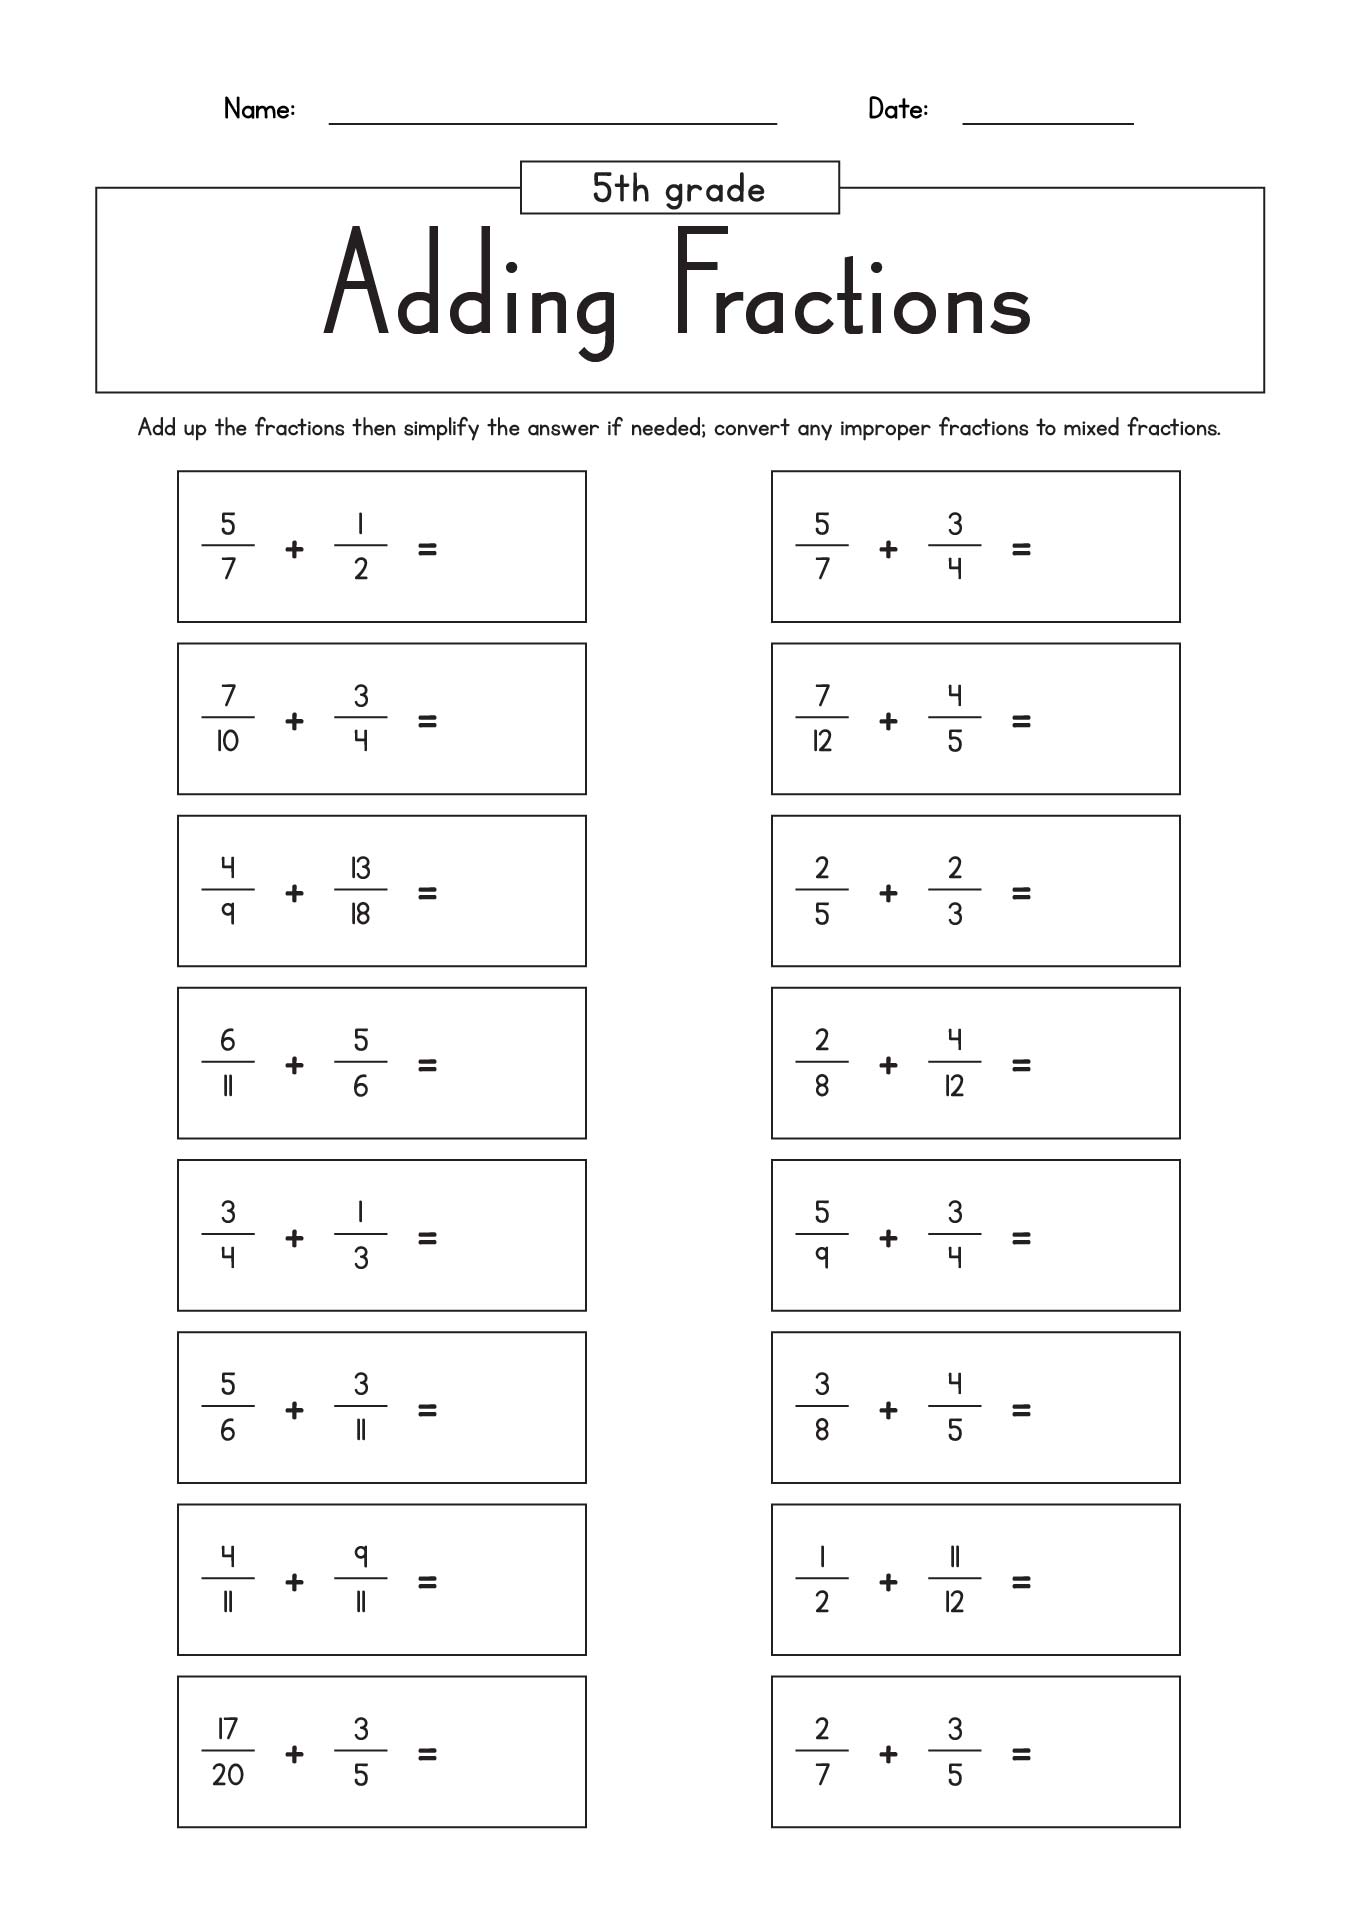 Adding Fractions Worksheets 5th Grade